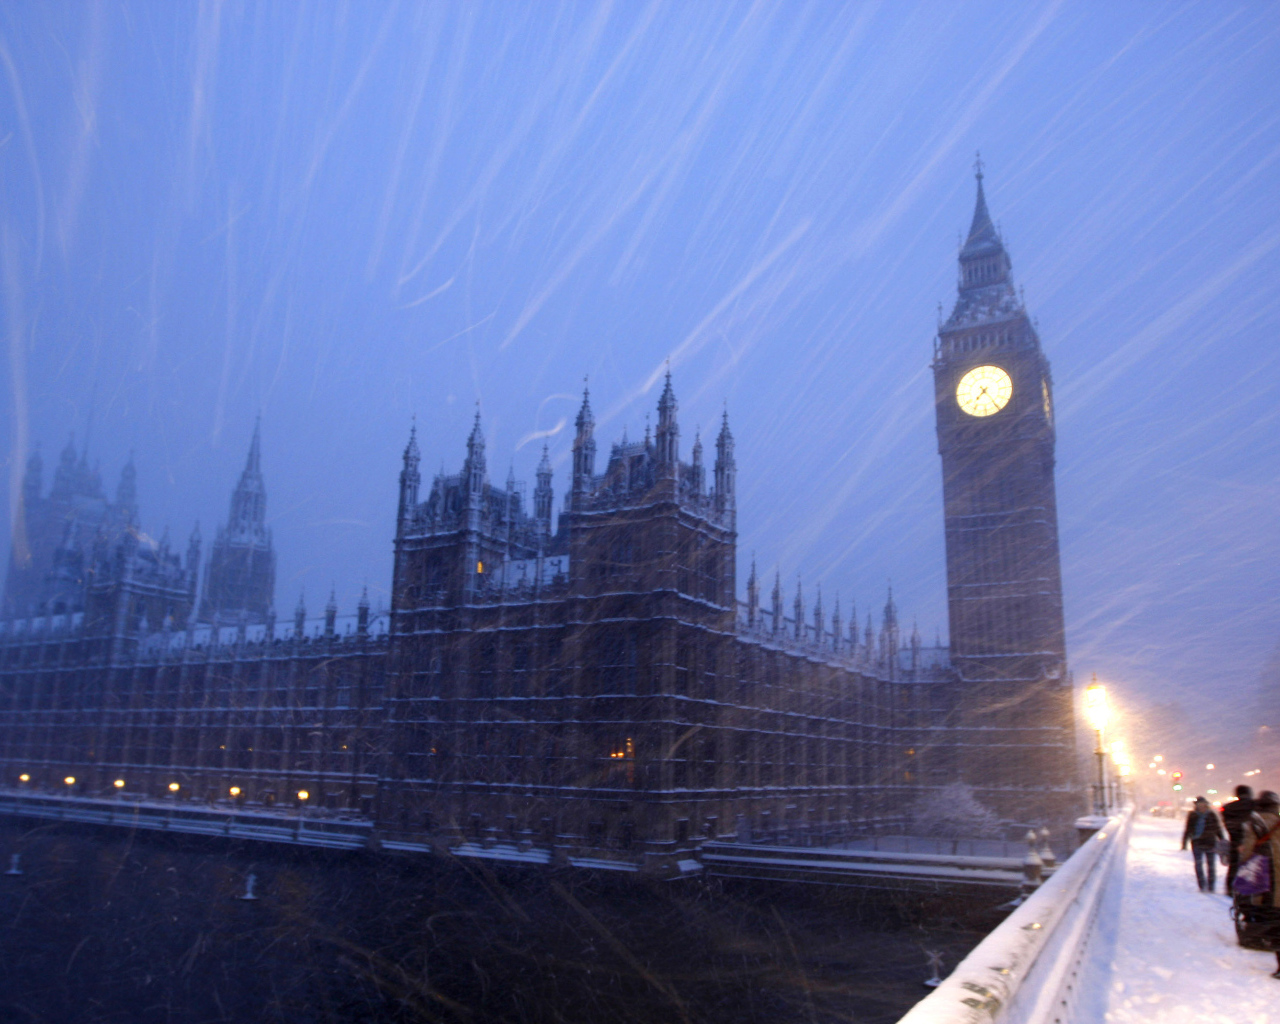 Snow blizzard in London